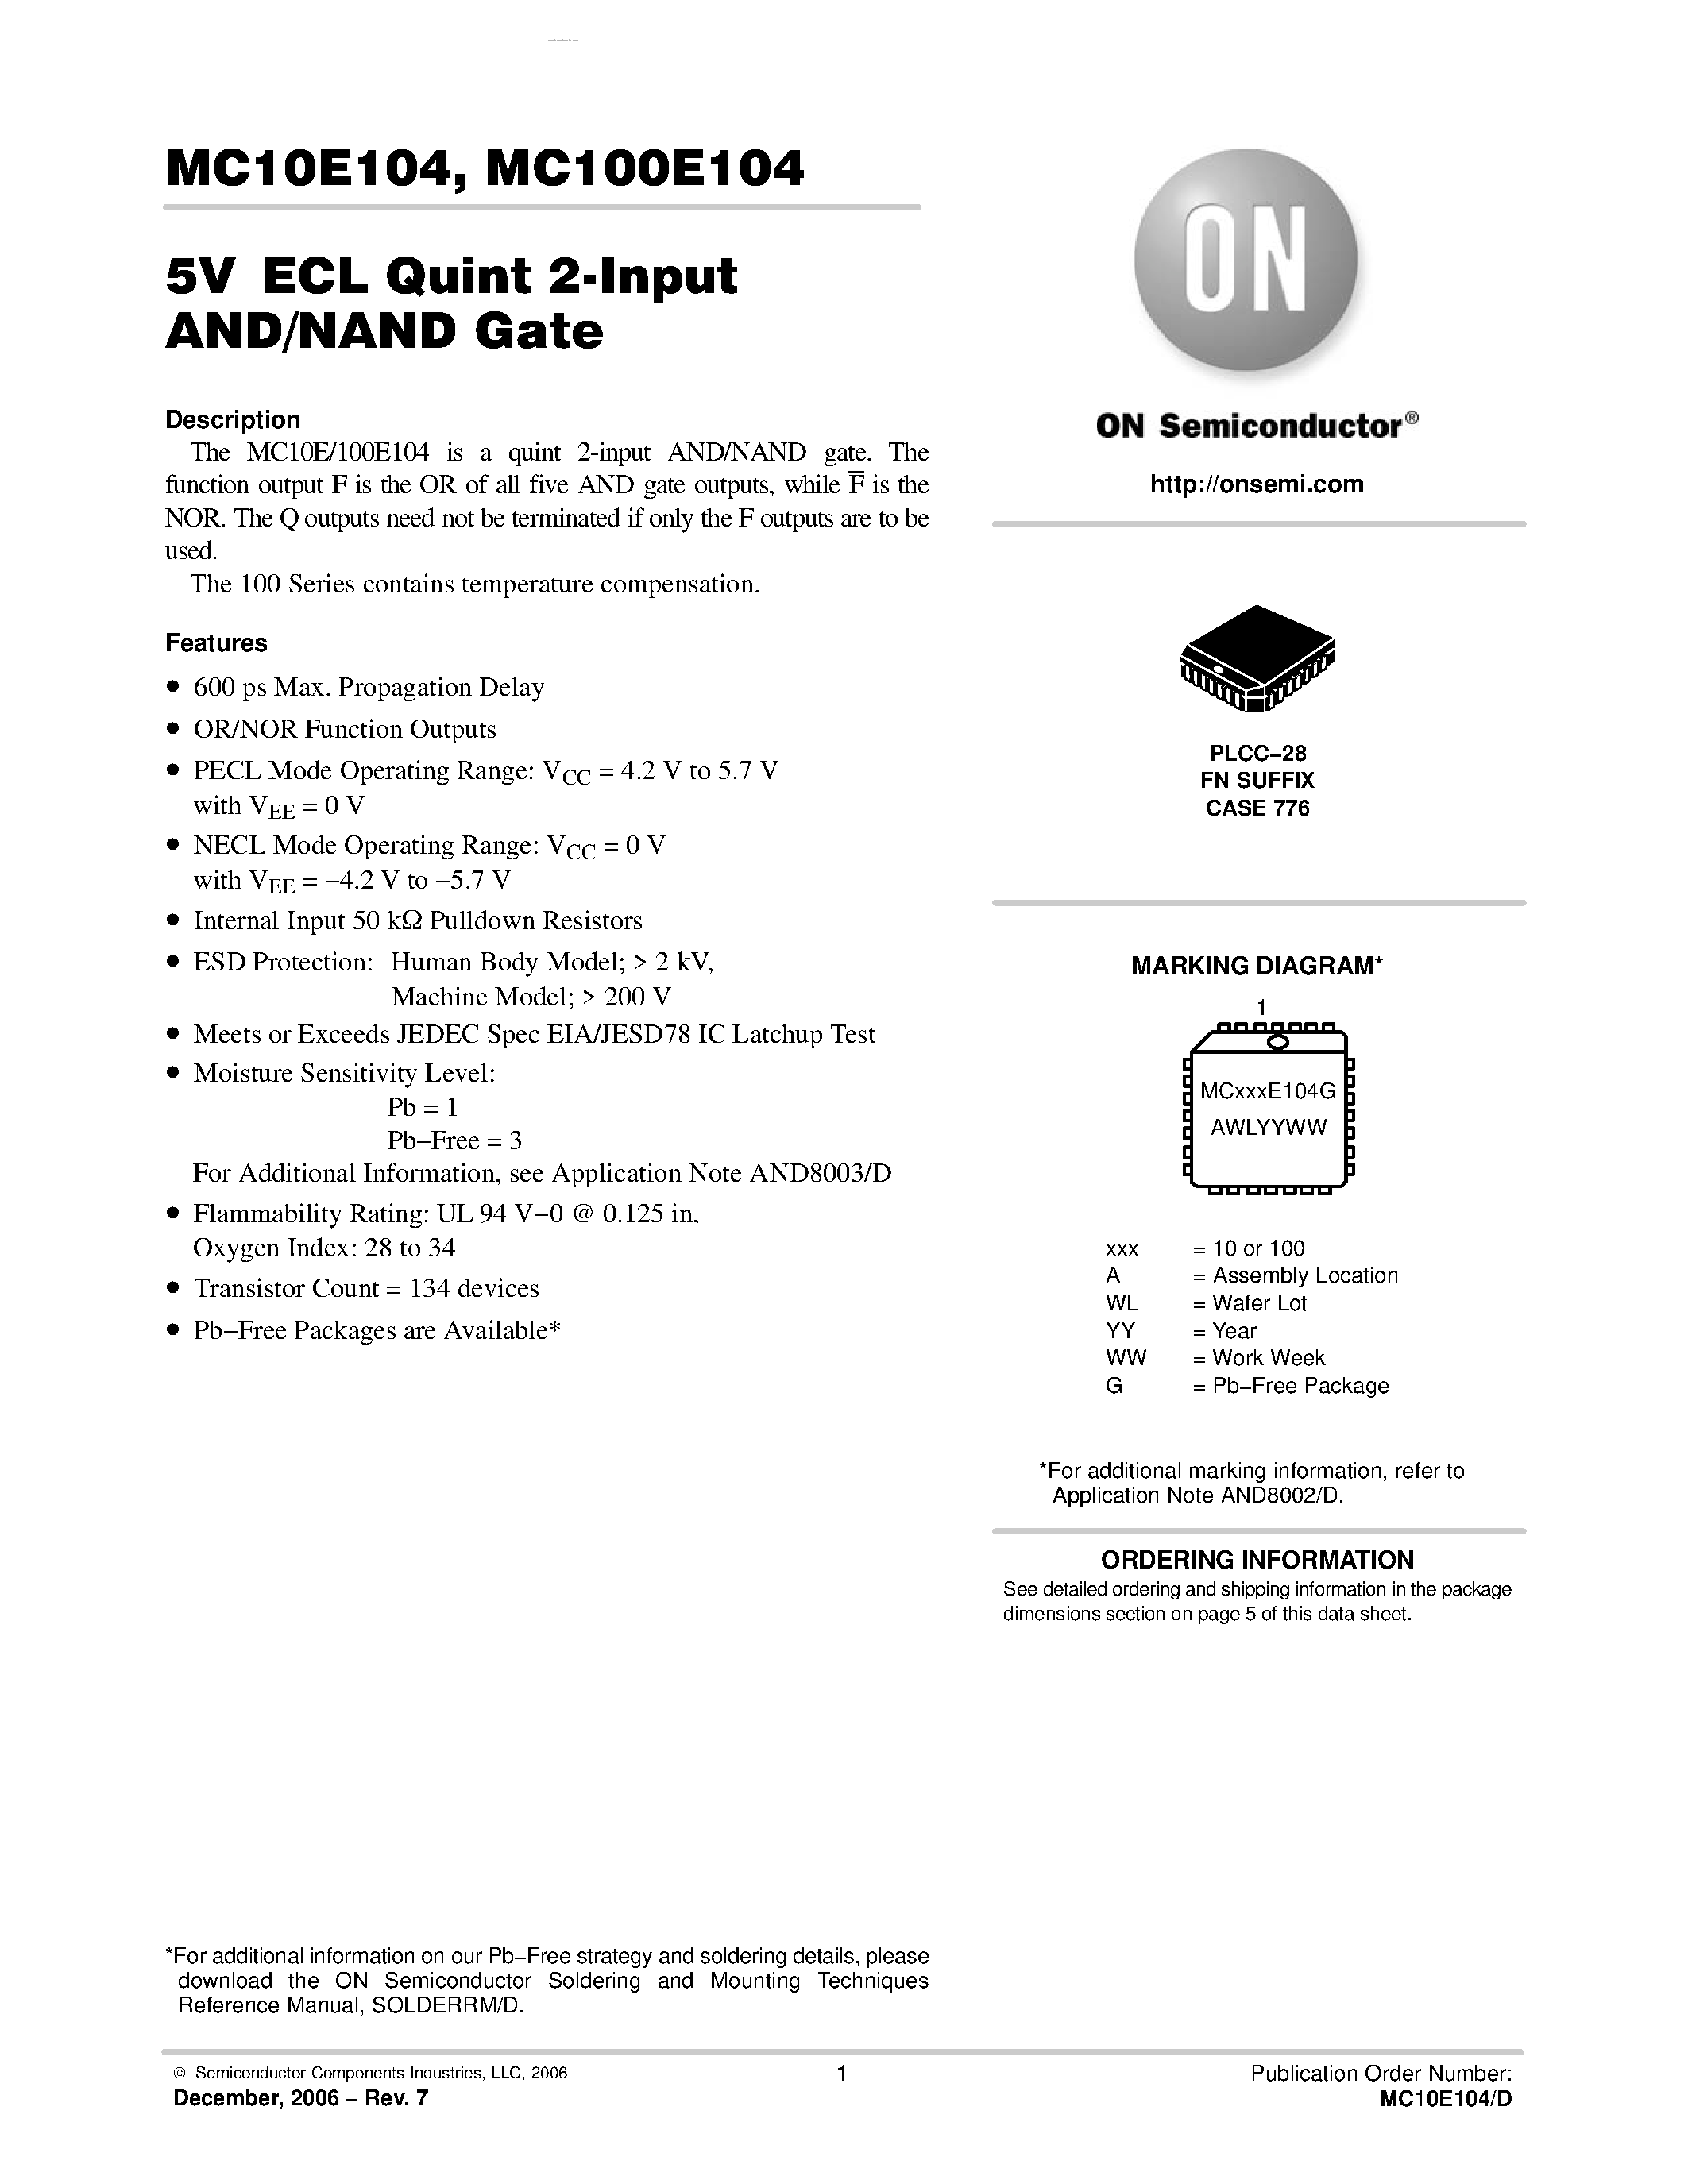 Datasheet MC100E104 - QUINT 2-INPUT AND/NAND GATE page 1